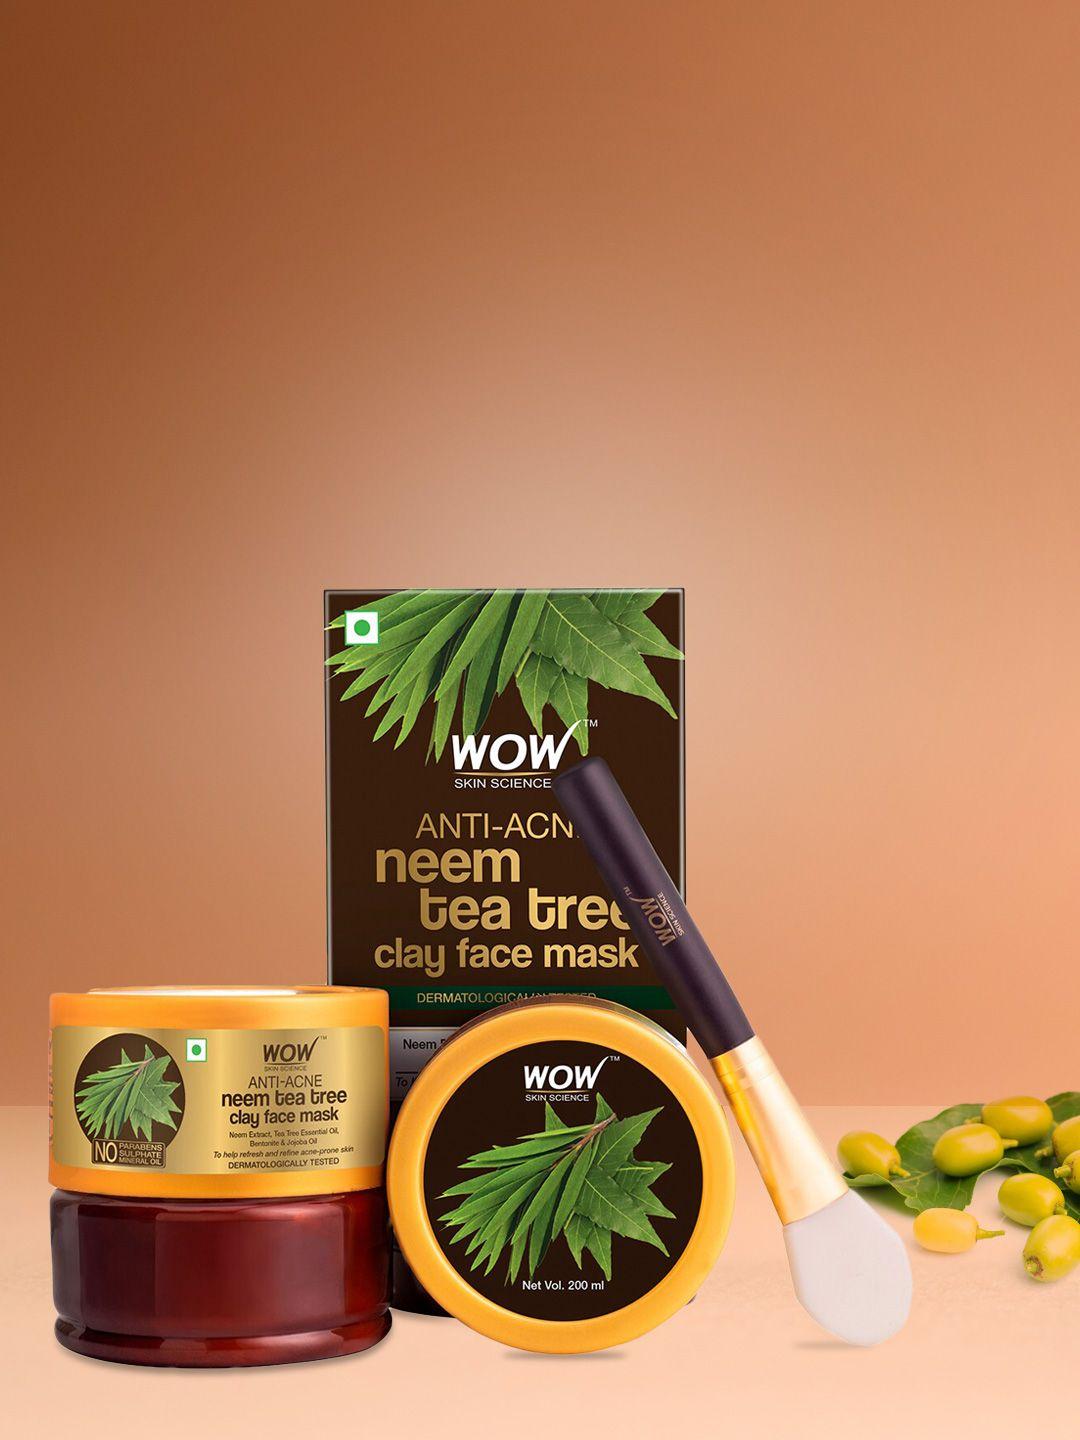 wow skin science anti-acne neem & tea tree clay face mask 200 ml